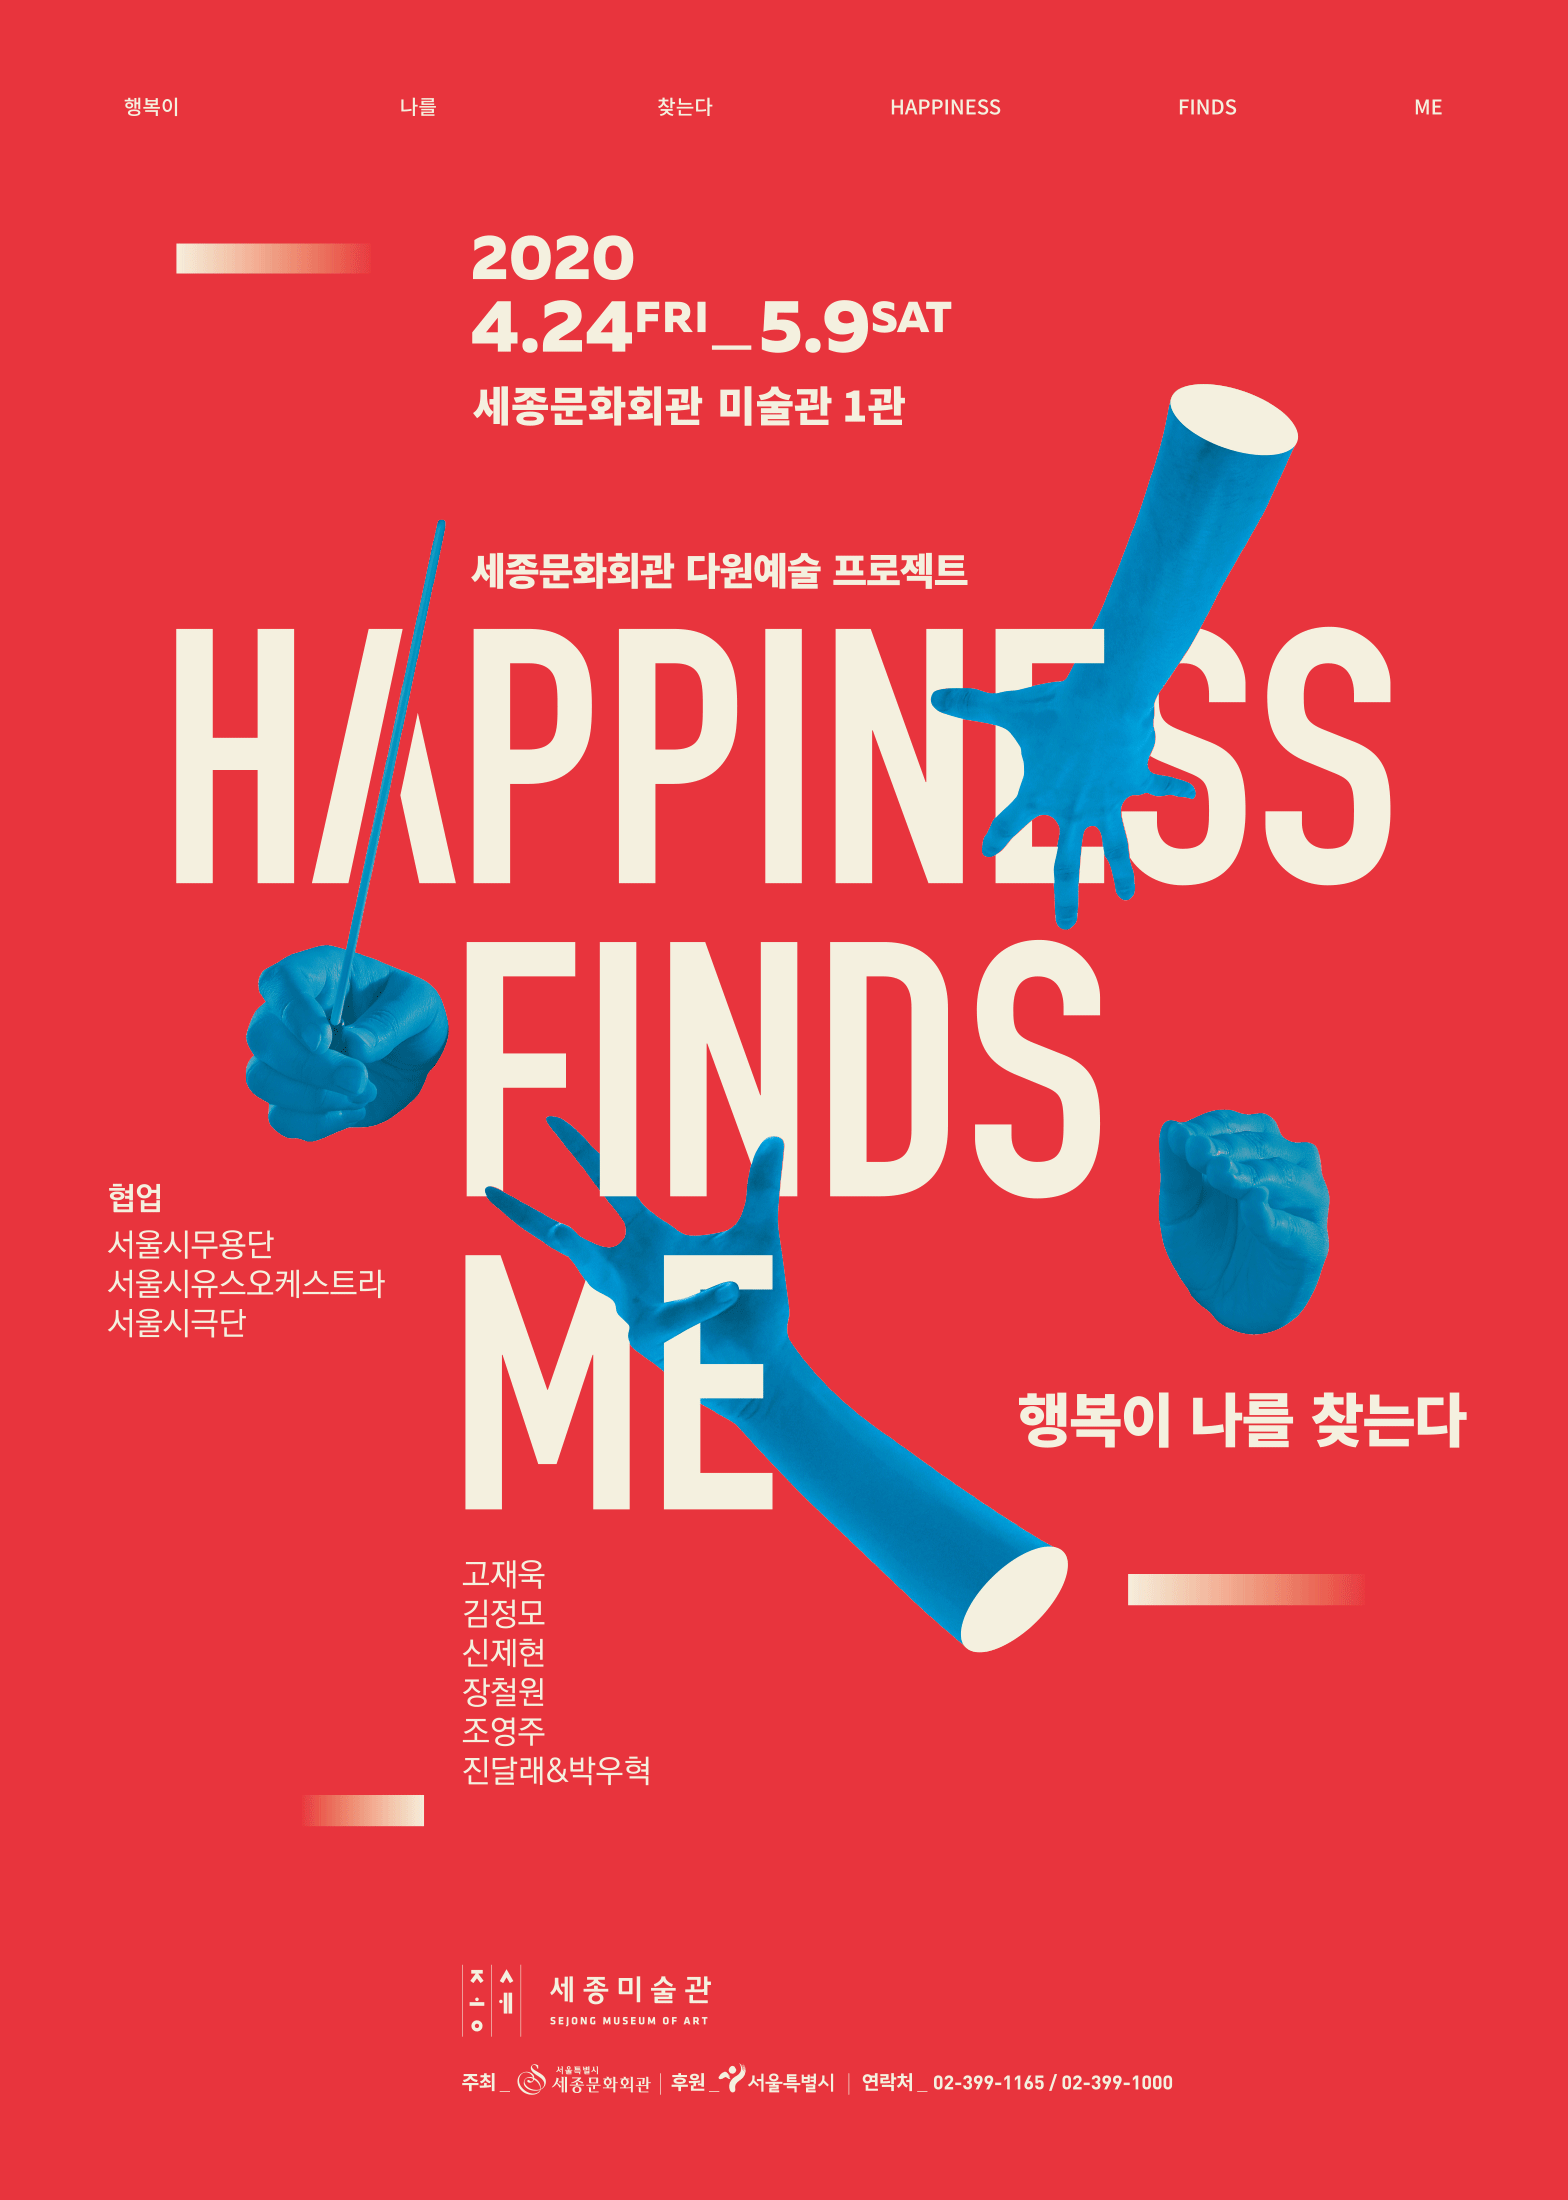 2020.4.24 fri -5.9 sat 세종문화회관 미술관 1관 세종문화회관 다원예술 프로젝트 happiness finds me 행복이 나를 찾는다